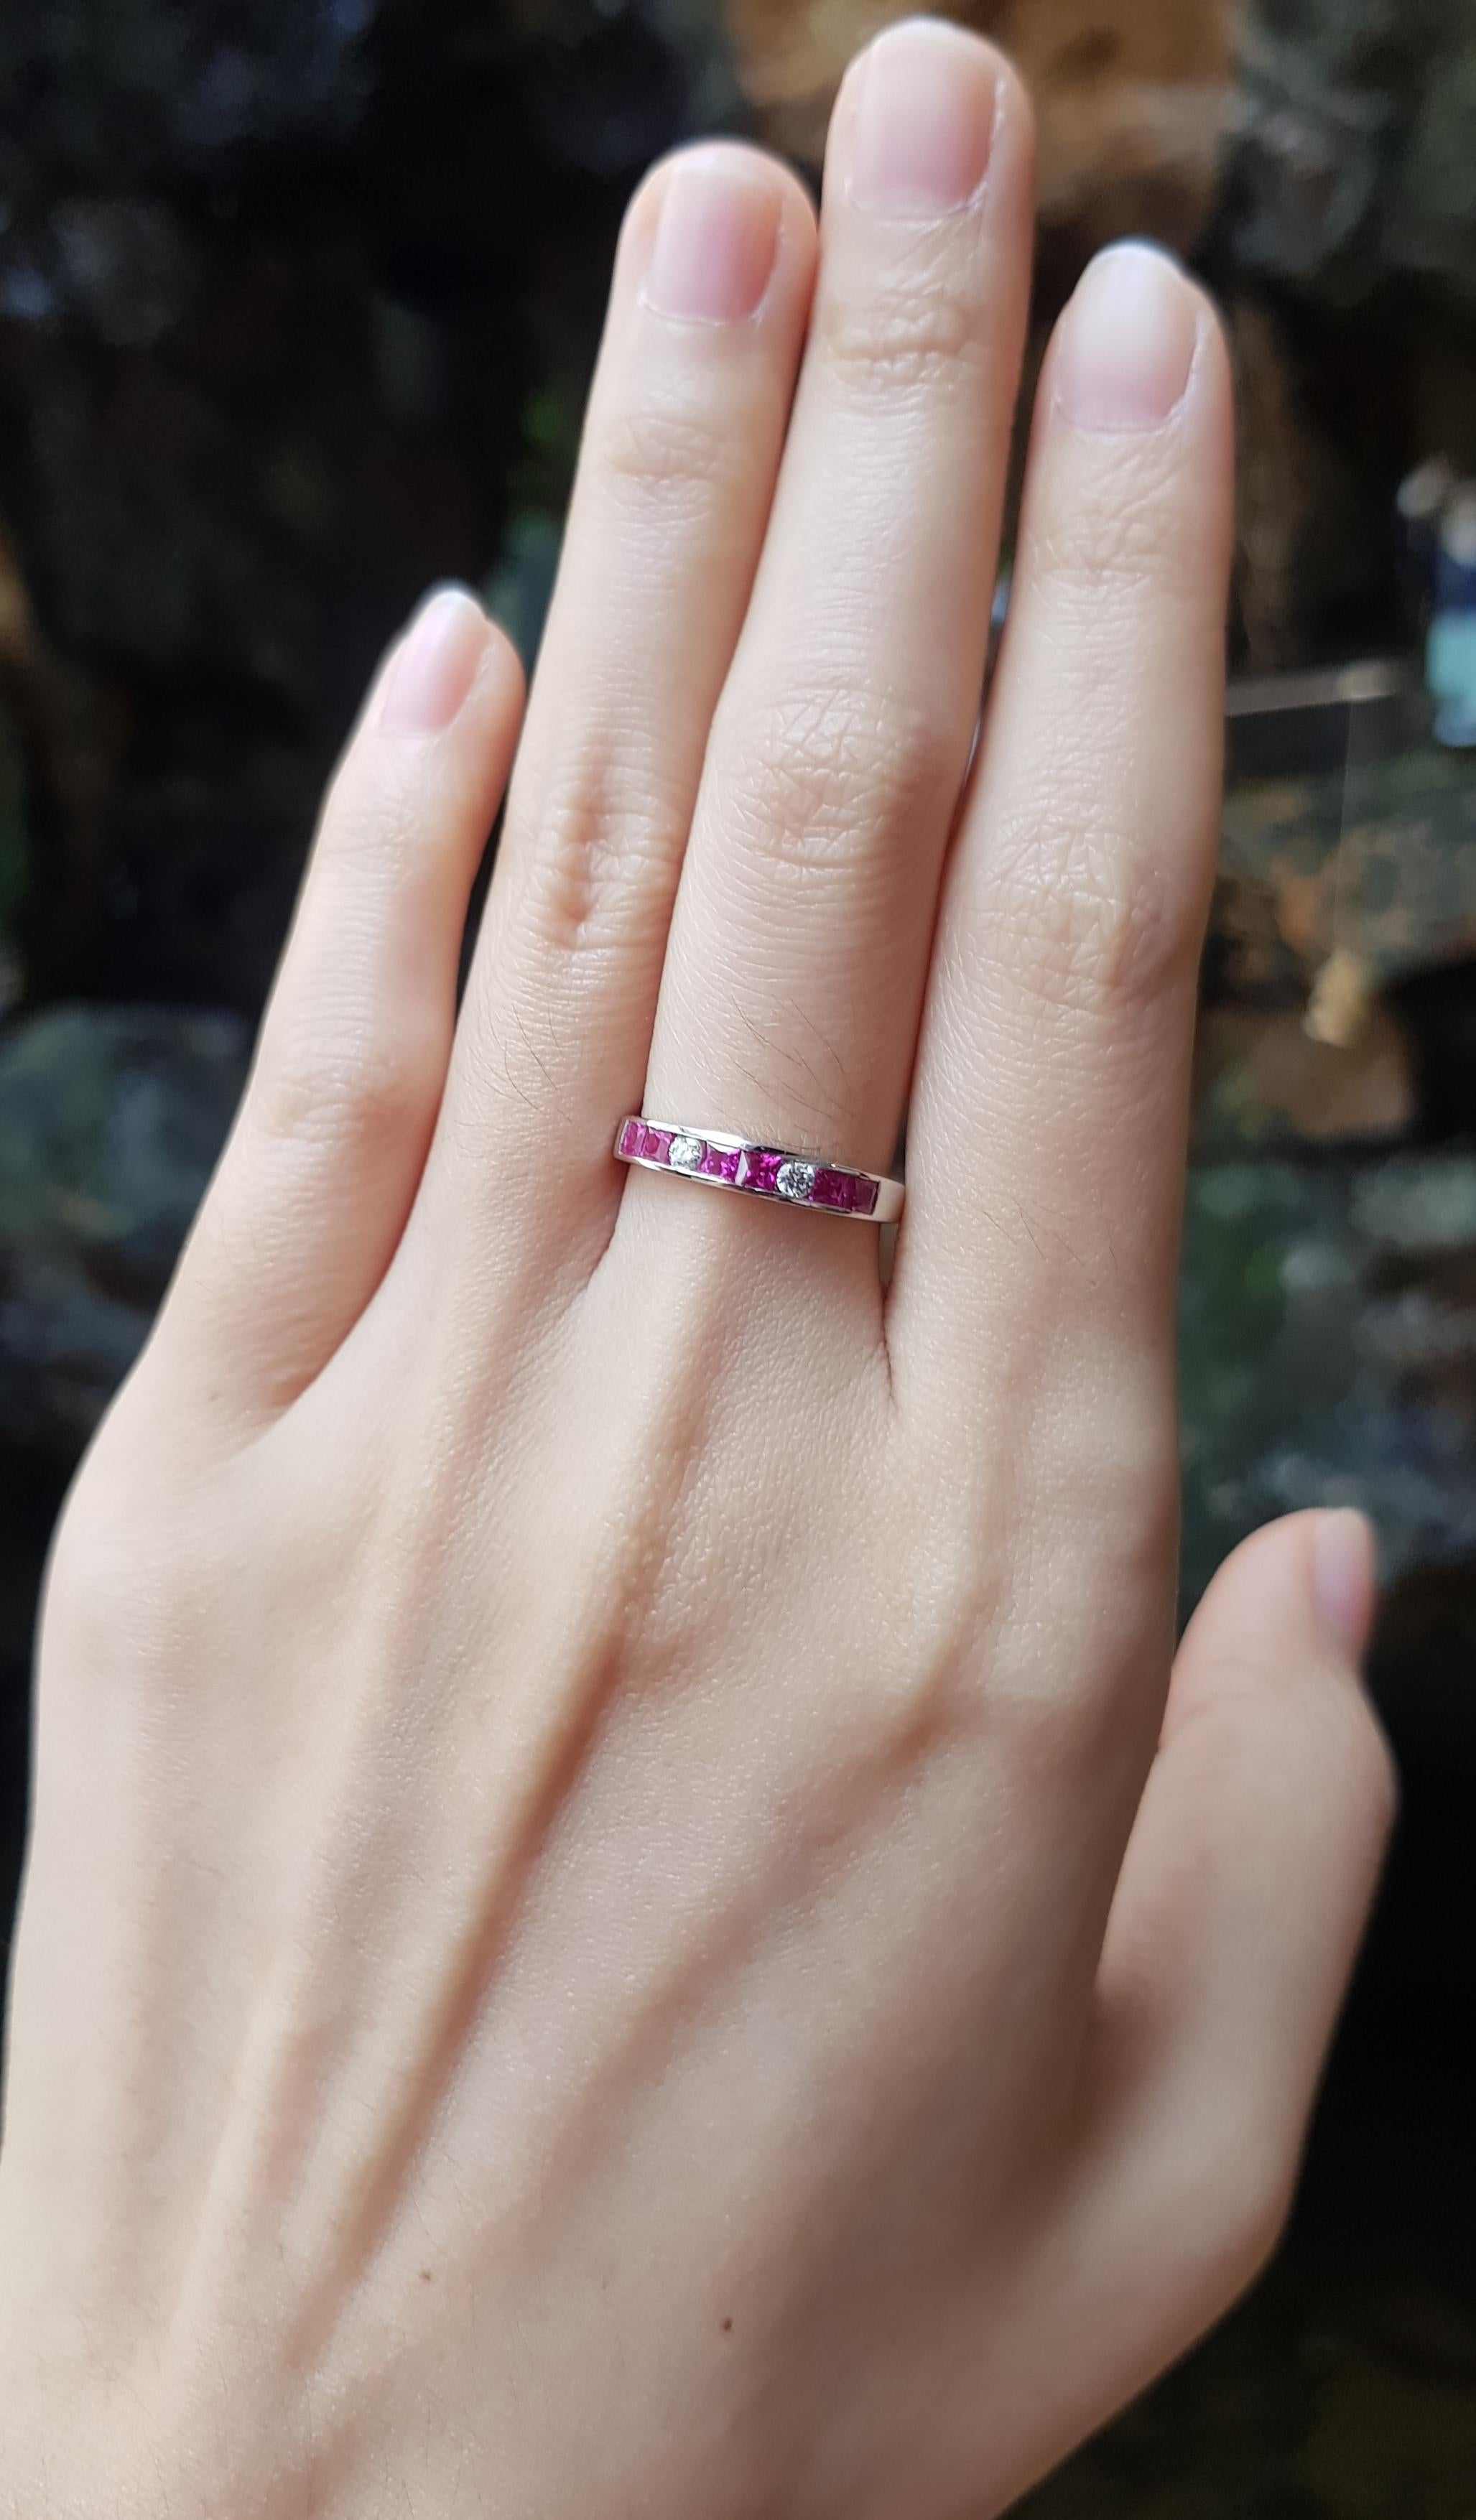 Pink Sapphire 0.64 carat with Diamond 0.08 carat Ring set in 18 Karat White Gold Settings

Width:  1.6 cm 
Length: 0.3 cm
Ring Size: 52
Total Weight: 2.23 grams

